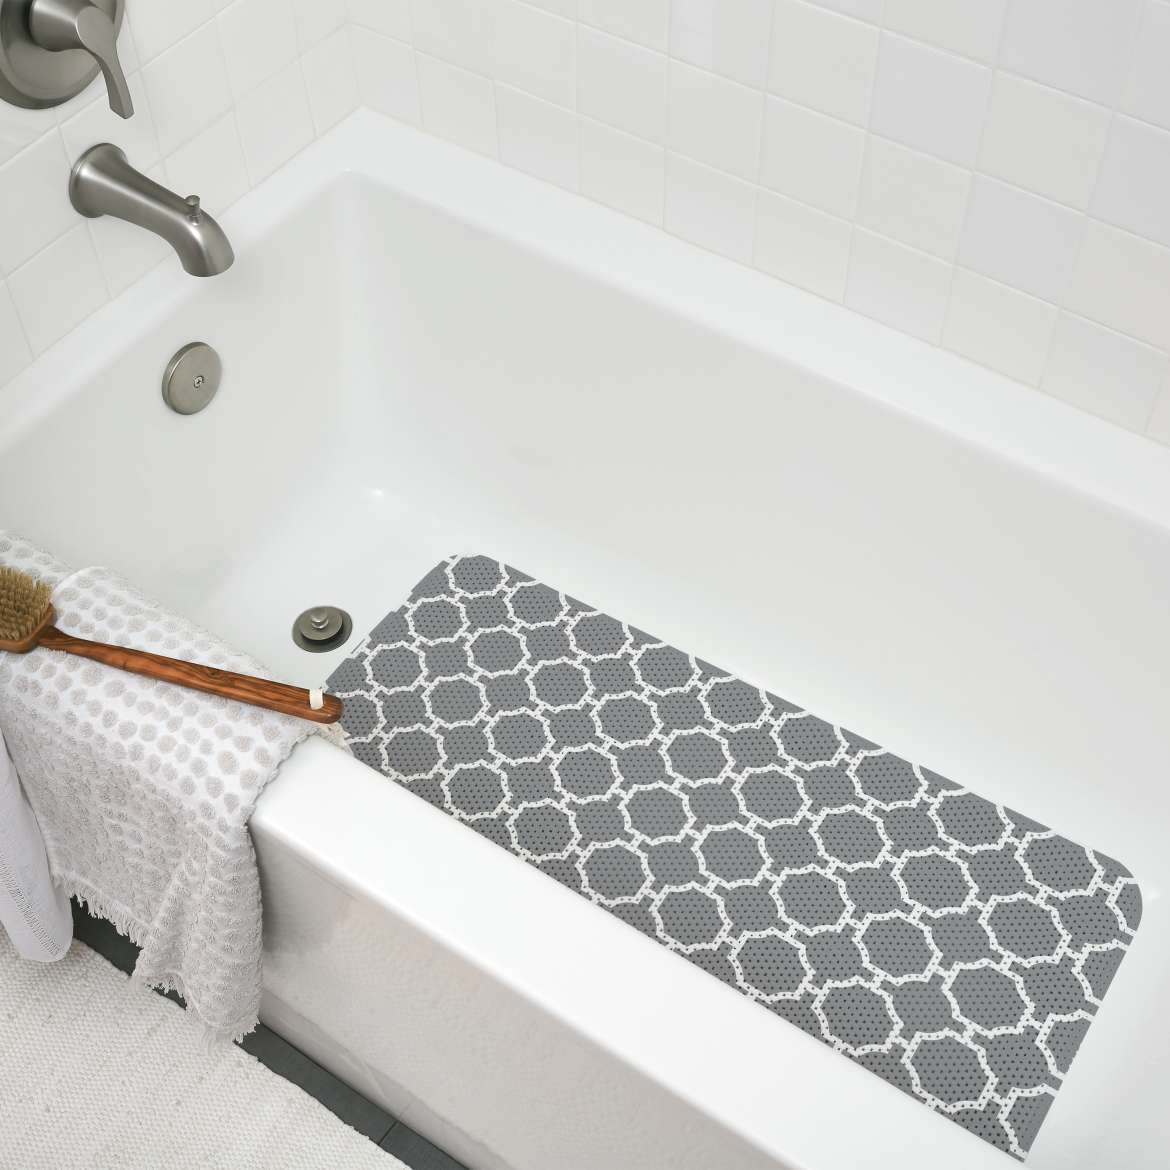 Softex® Bath and Shower Mats